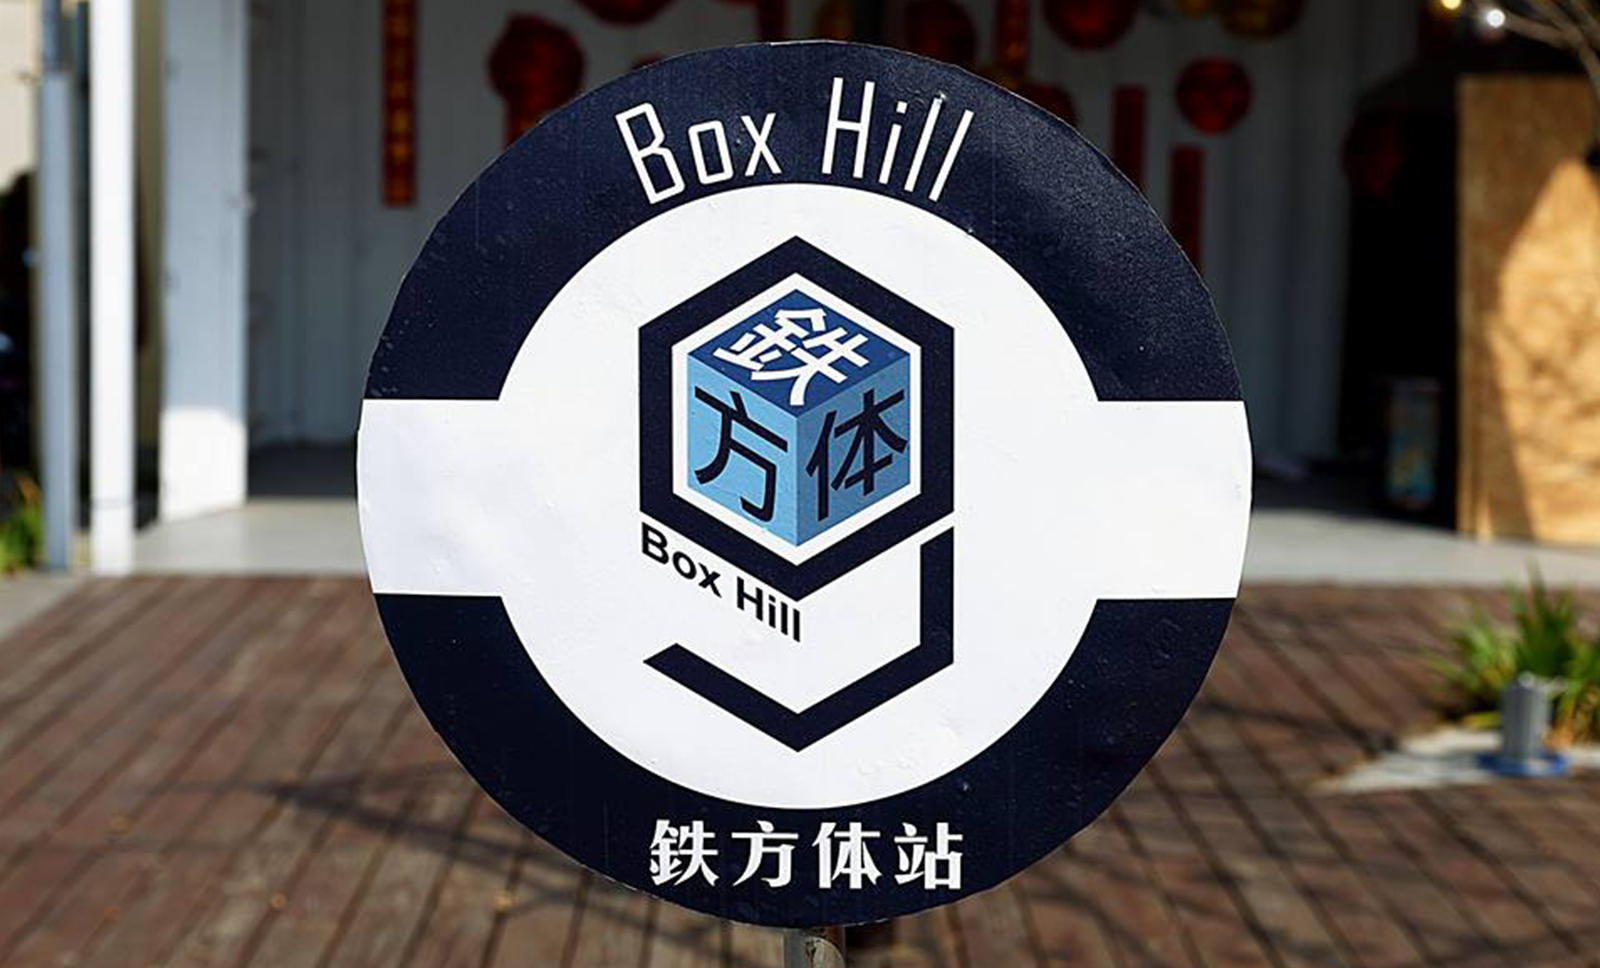 鐵方體 BoxHill